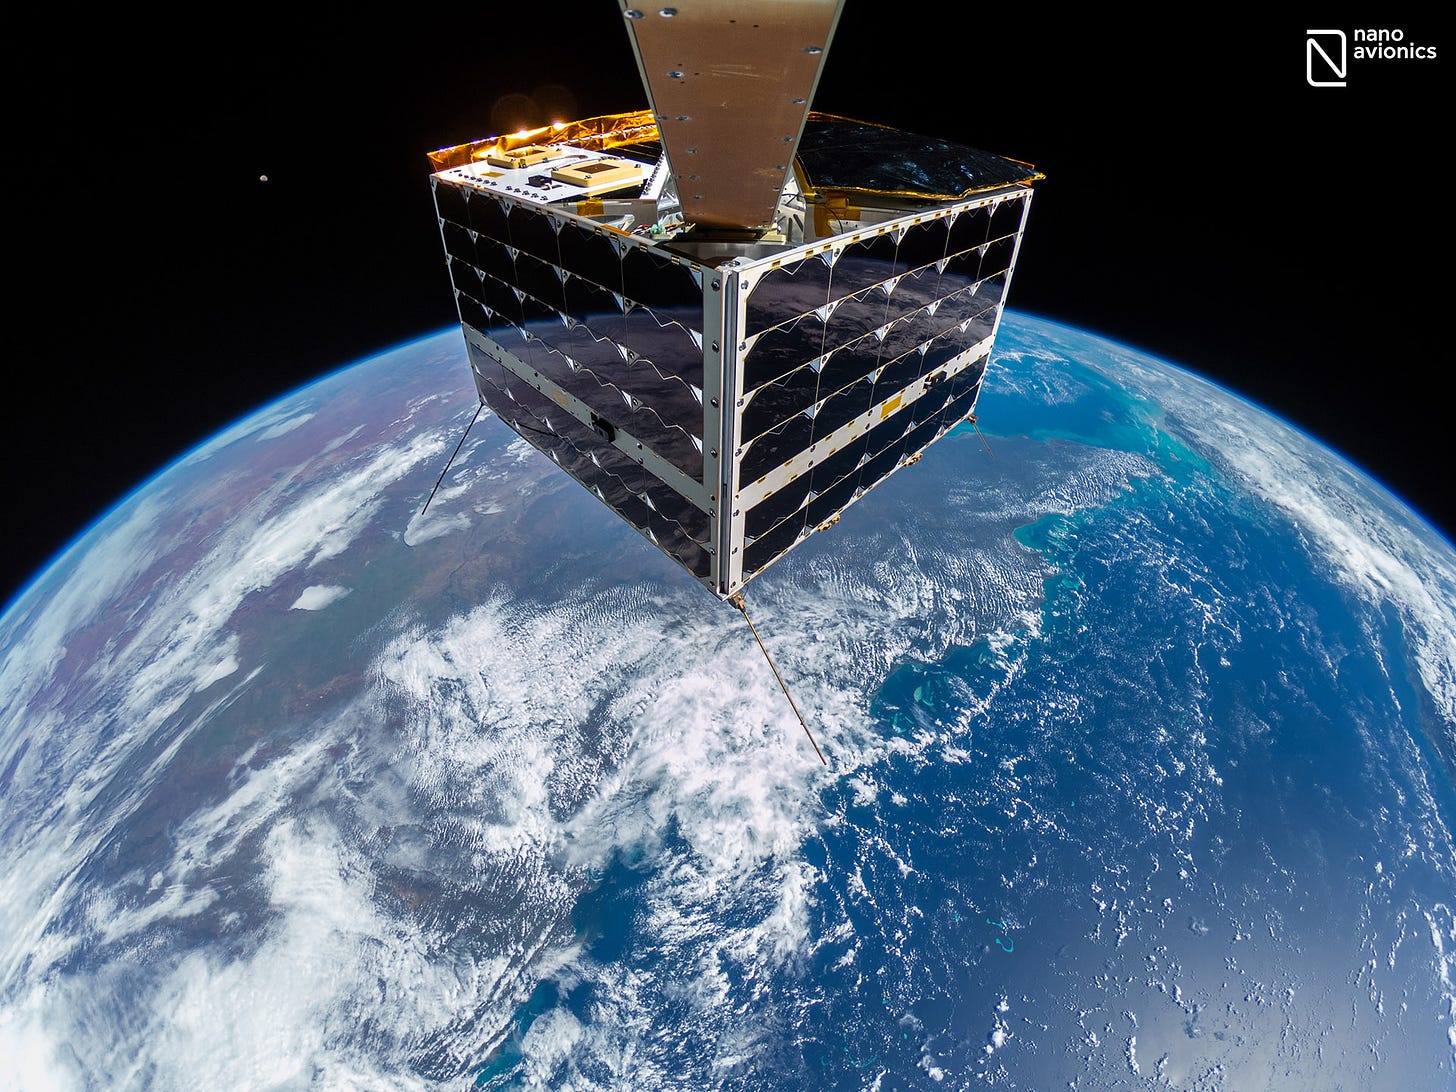 NanoAvionics captures first 4K resolution satellite selfie in space ...